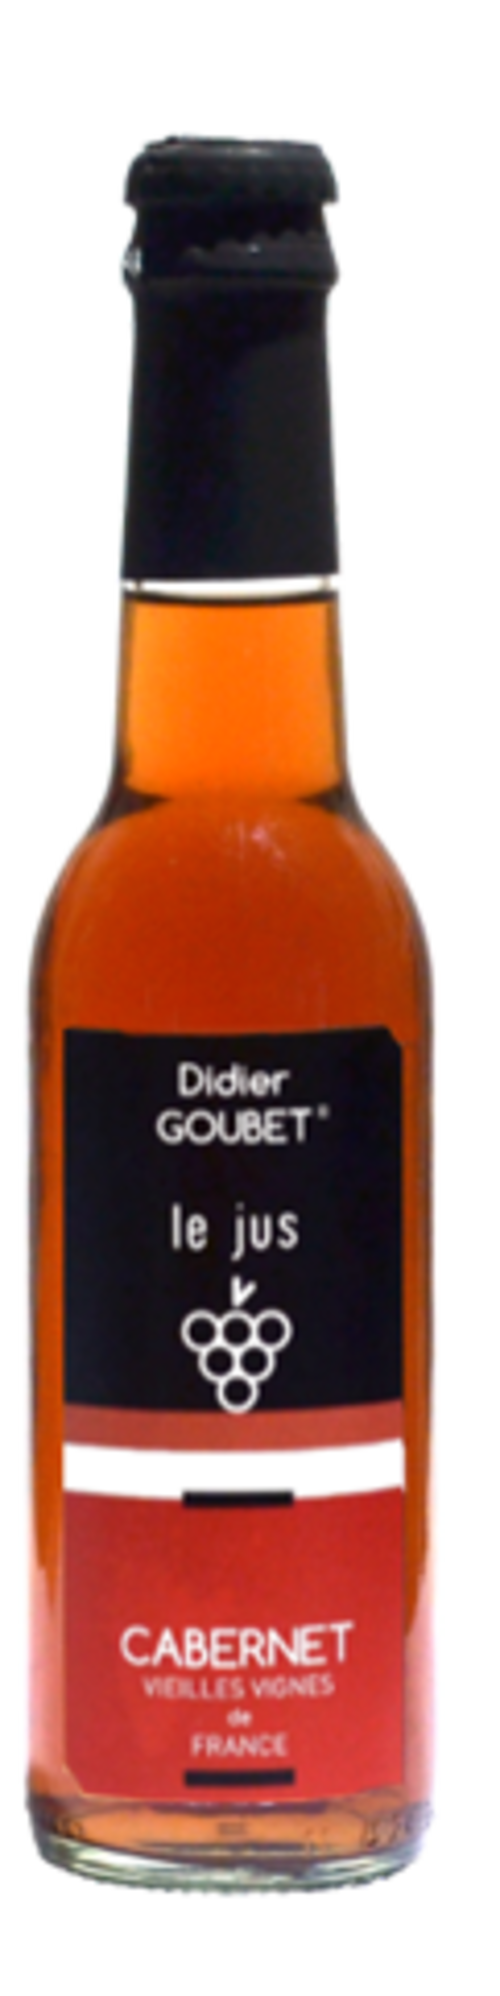 Didier Goubet 卡本內老藤紅葡萄汁<br/>GRAPE JUICE CABERNET <br/>示意圖